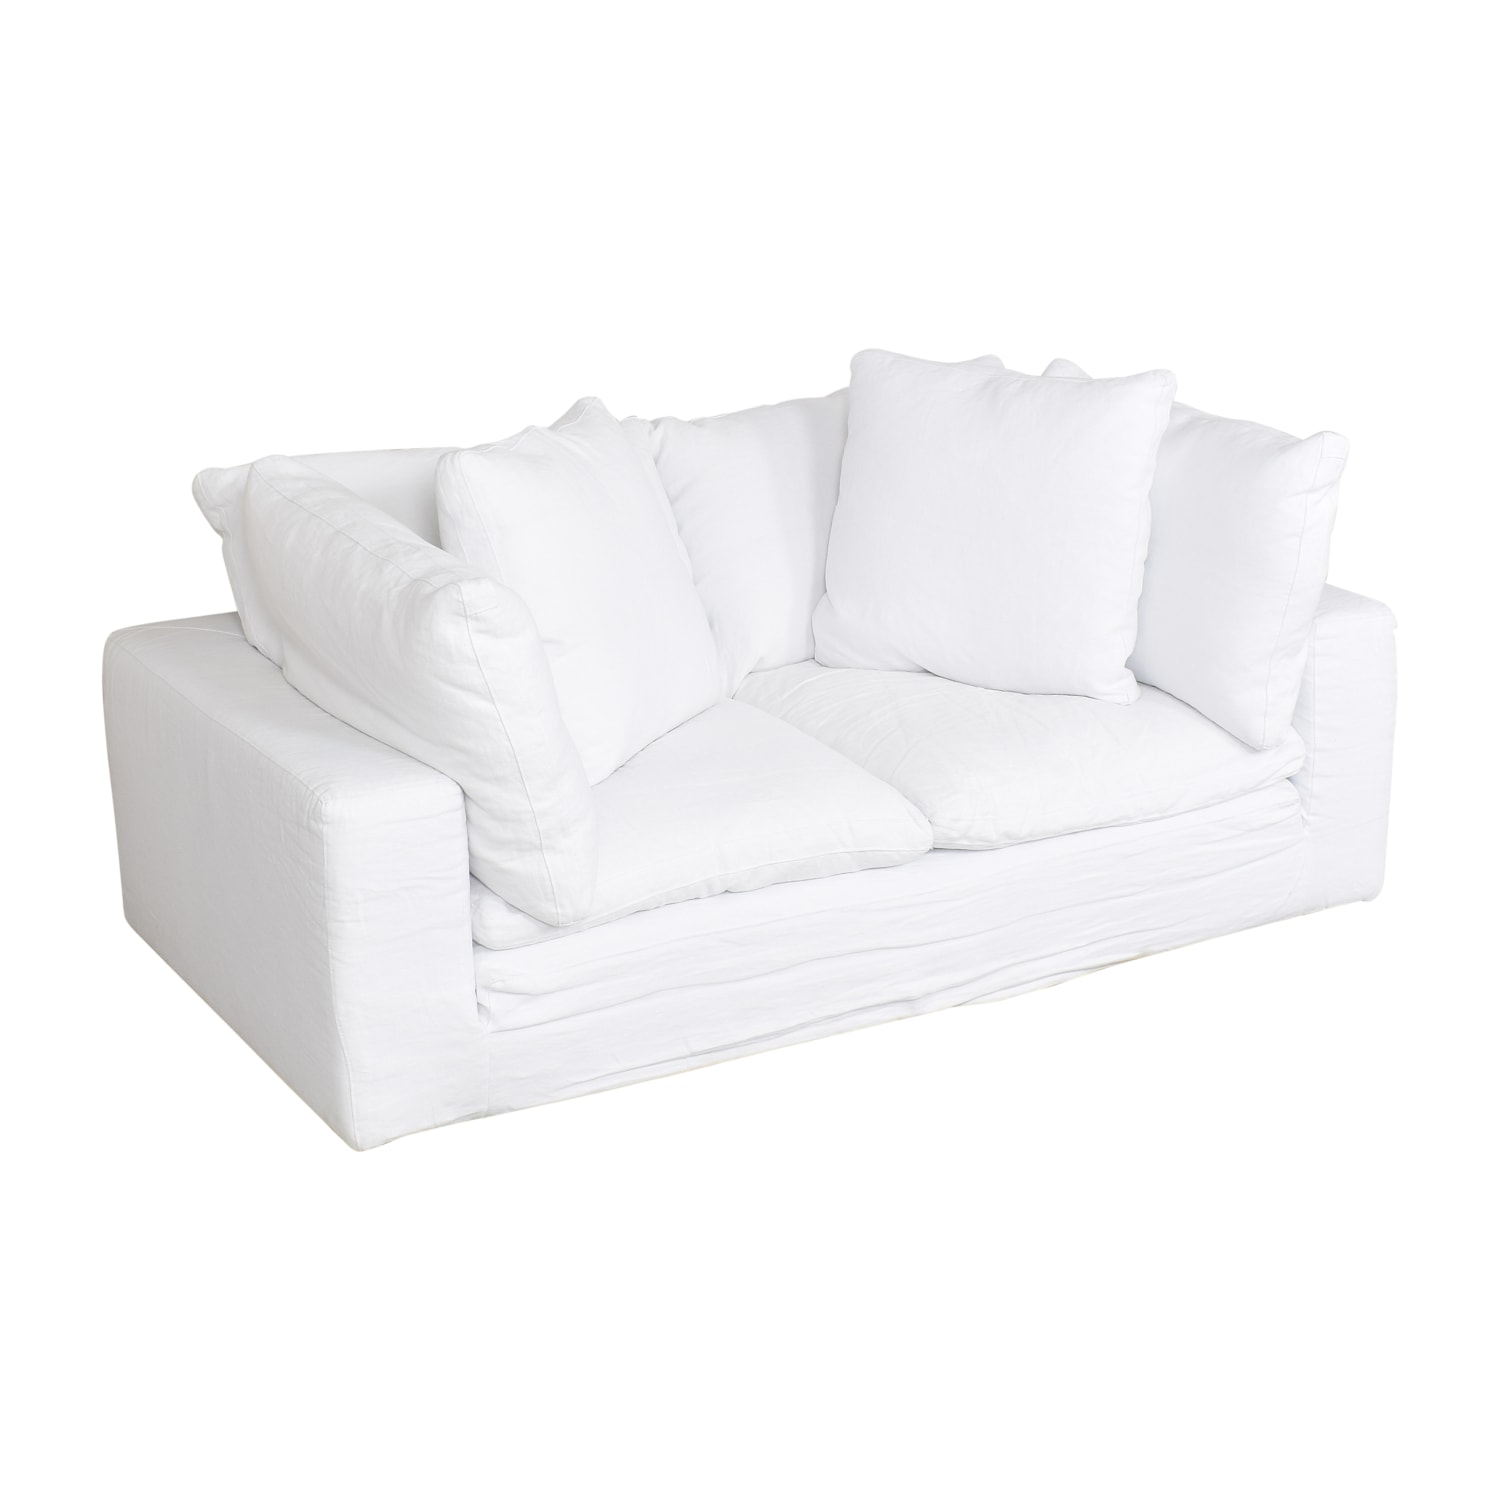 Restoration Hardware Cloud Leather Two-Seat-Cushion Sofa, 76% Off